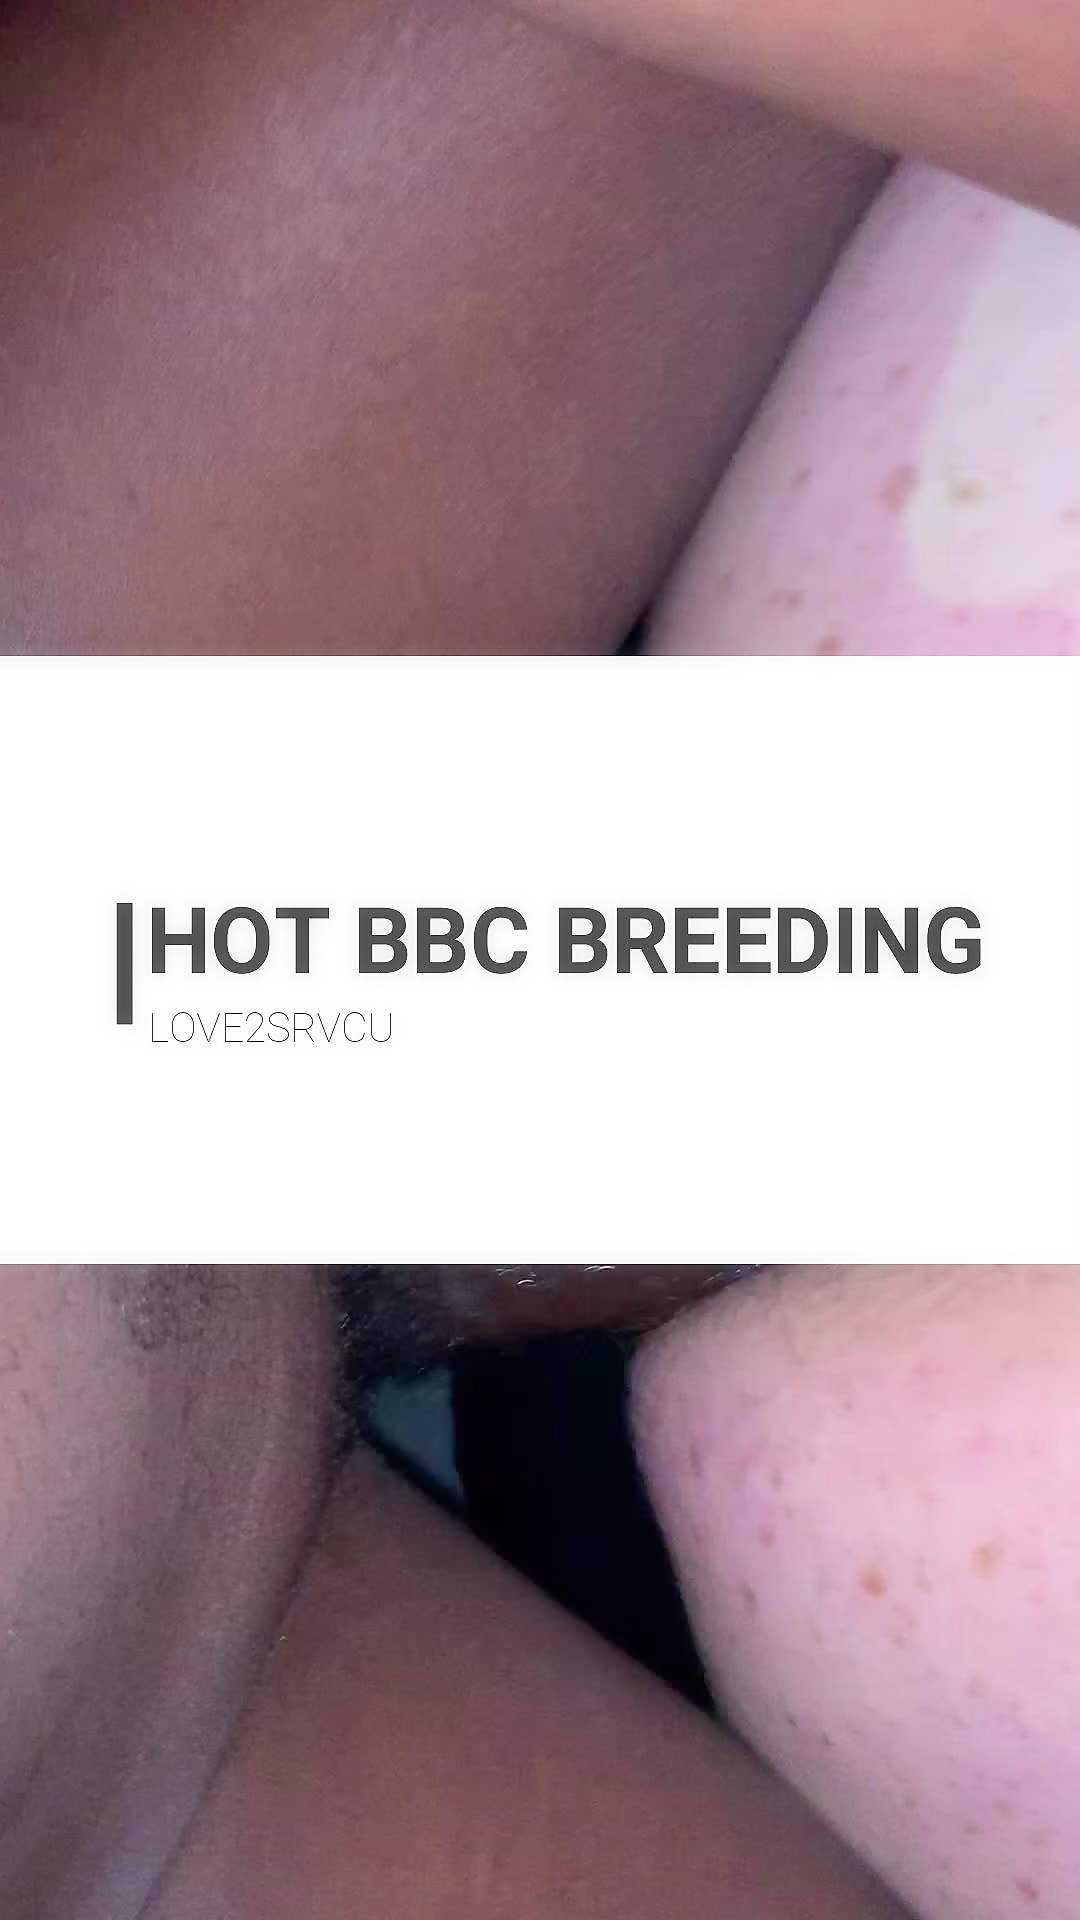 Another BBC Breeding Me